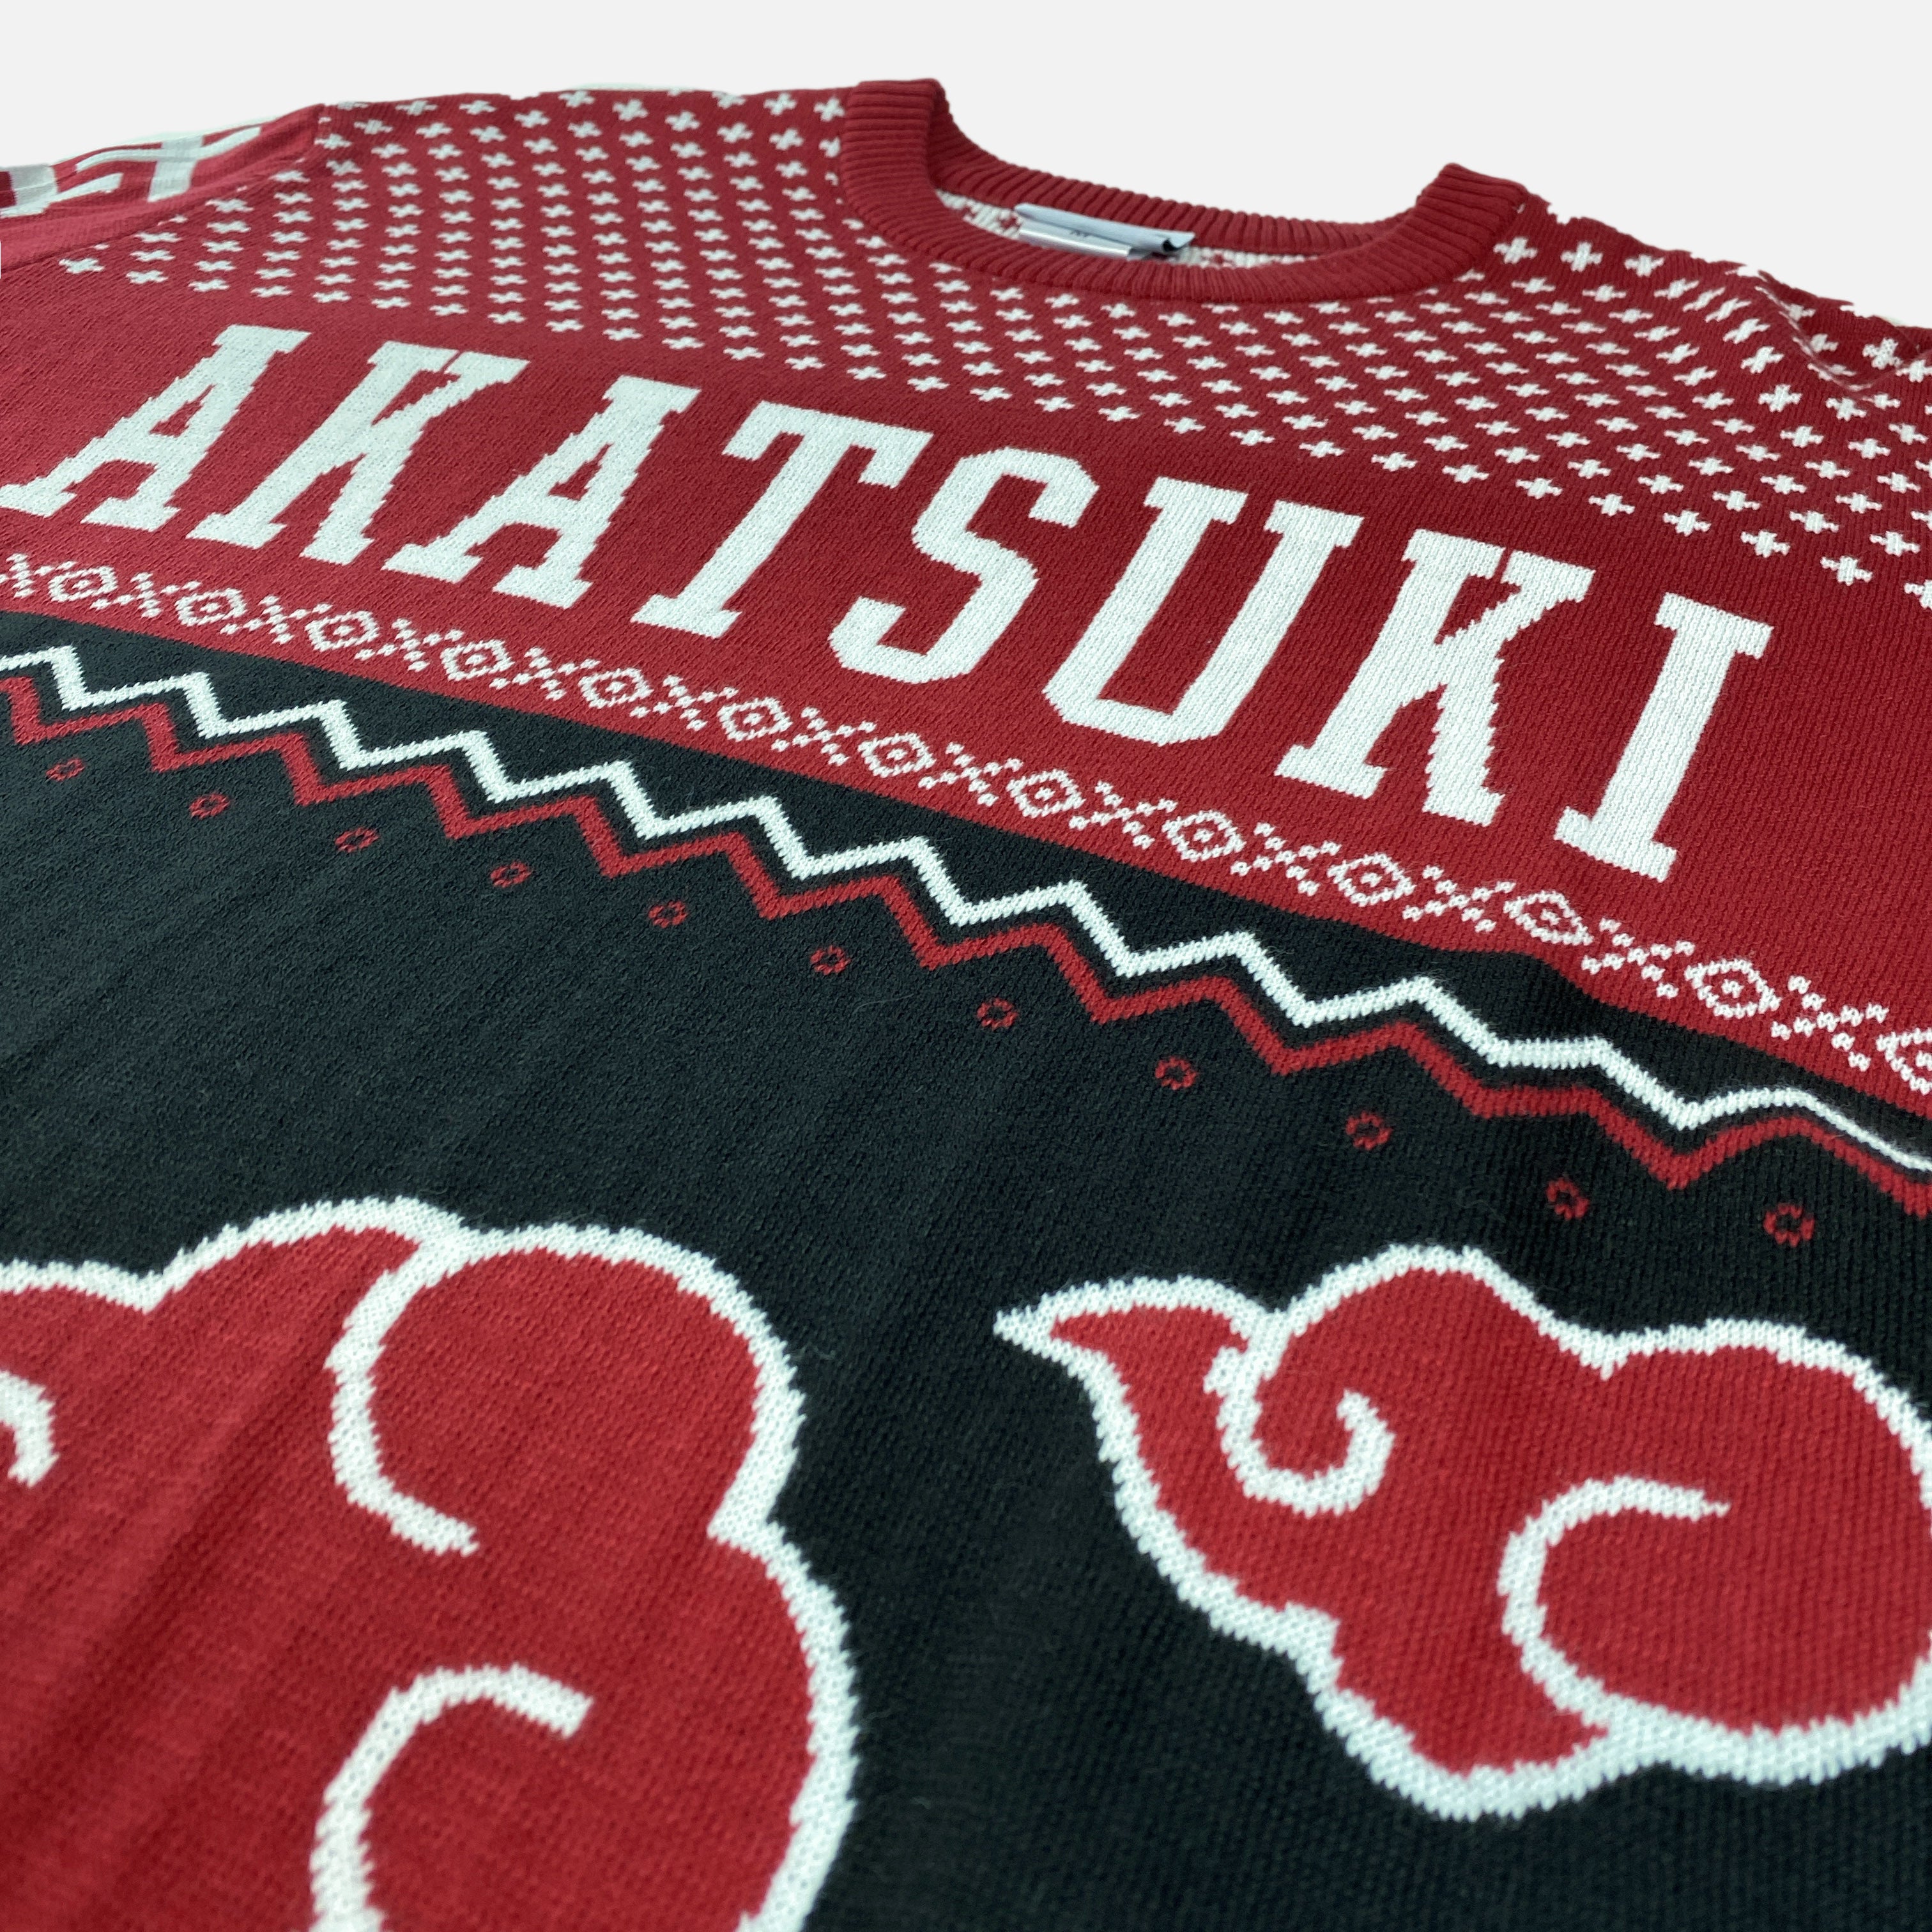 Naruto Shippuden - Akatsuki Holiday Sweater image count 2